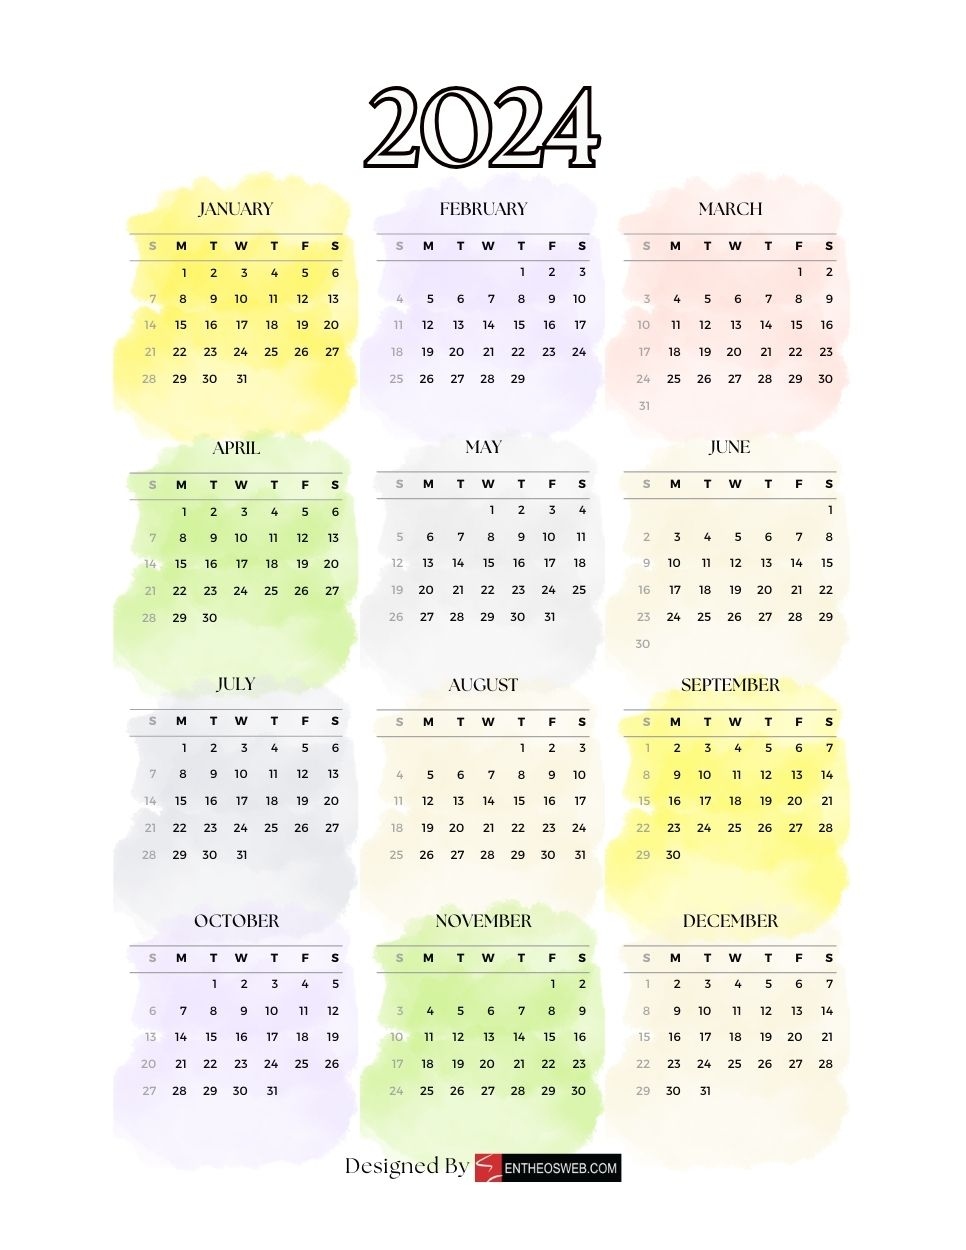 2024 Pdf Calendars – Free Printable Pdf Downloads | Entheosweb with regard to Free Printable Calendar 2024 Cute Pdf